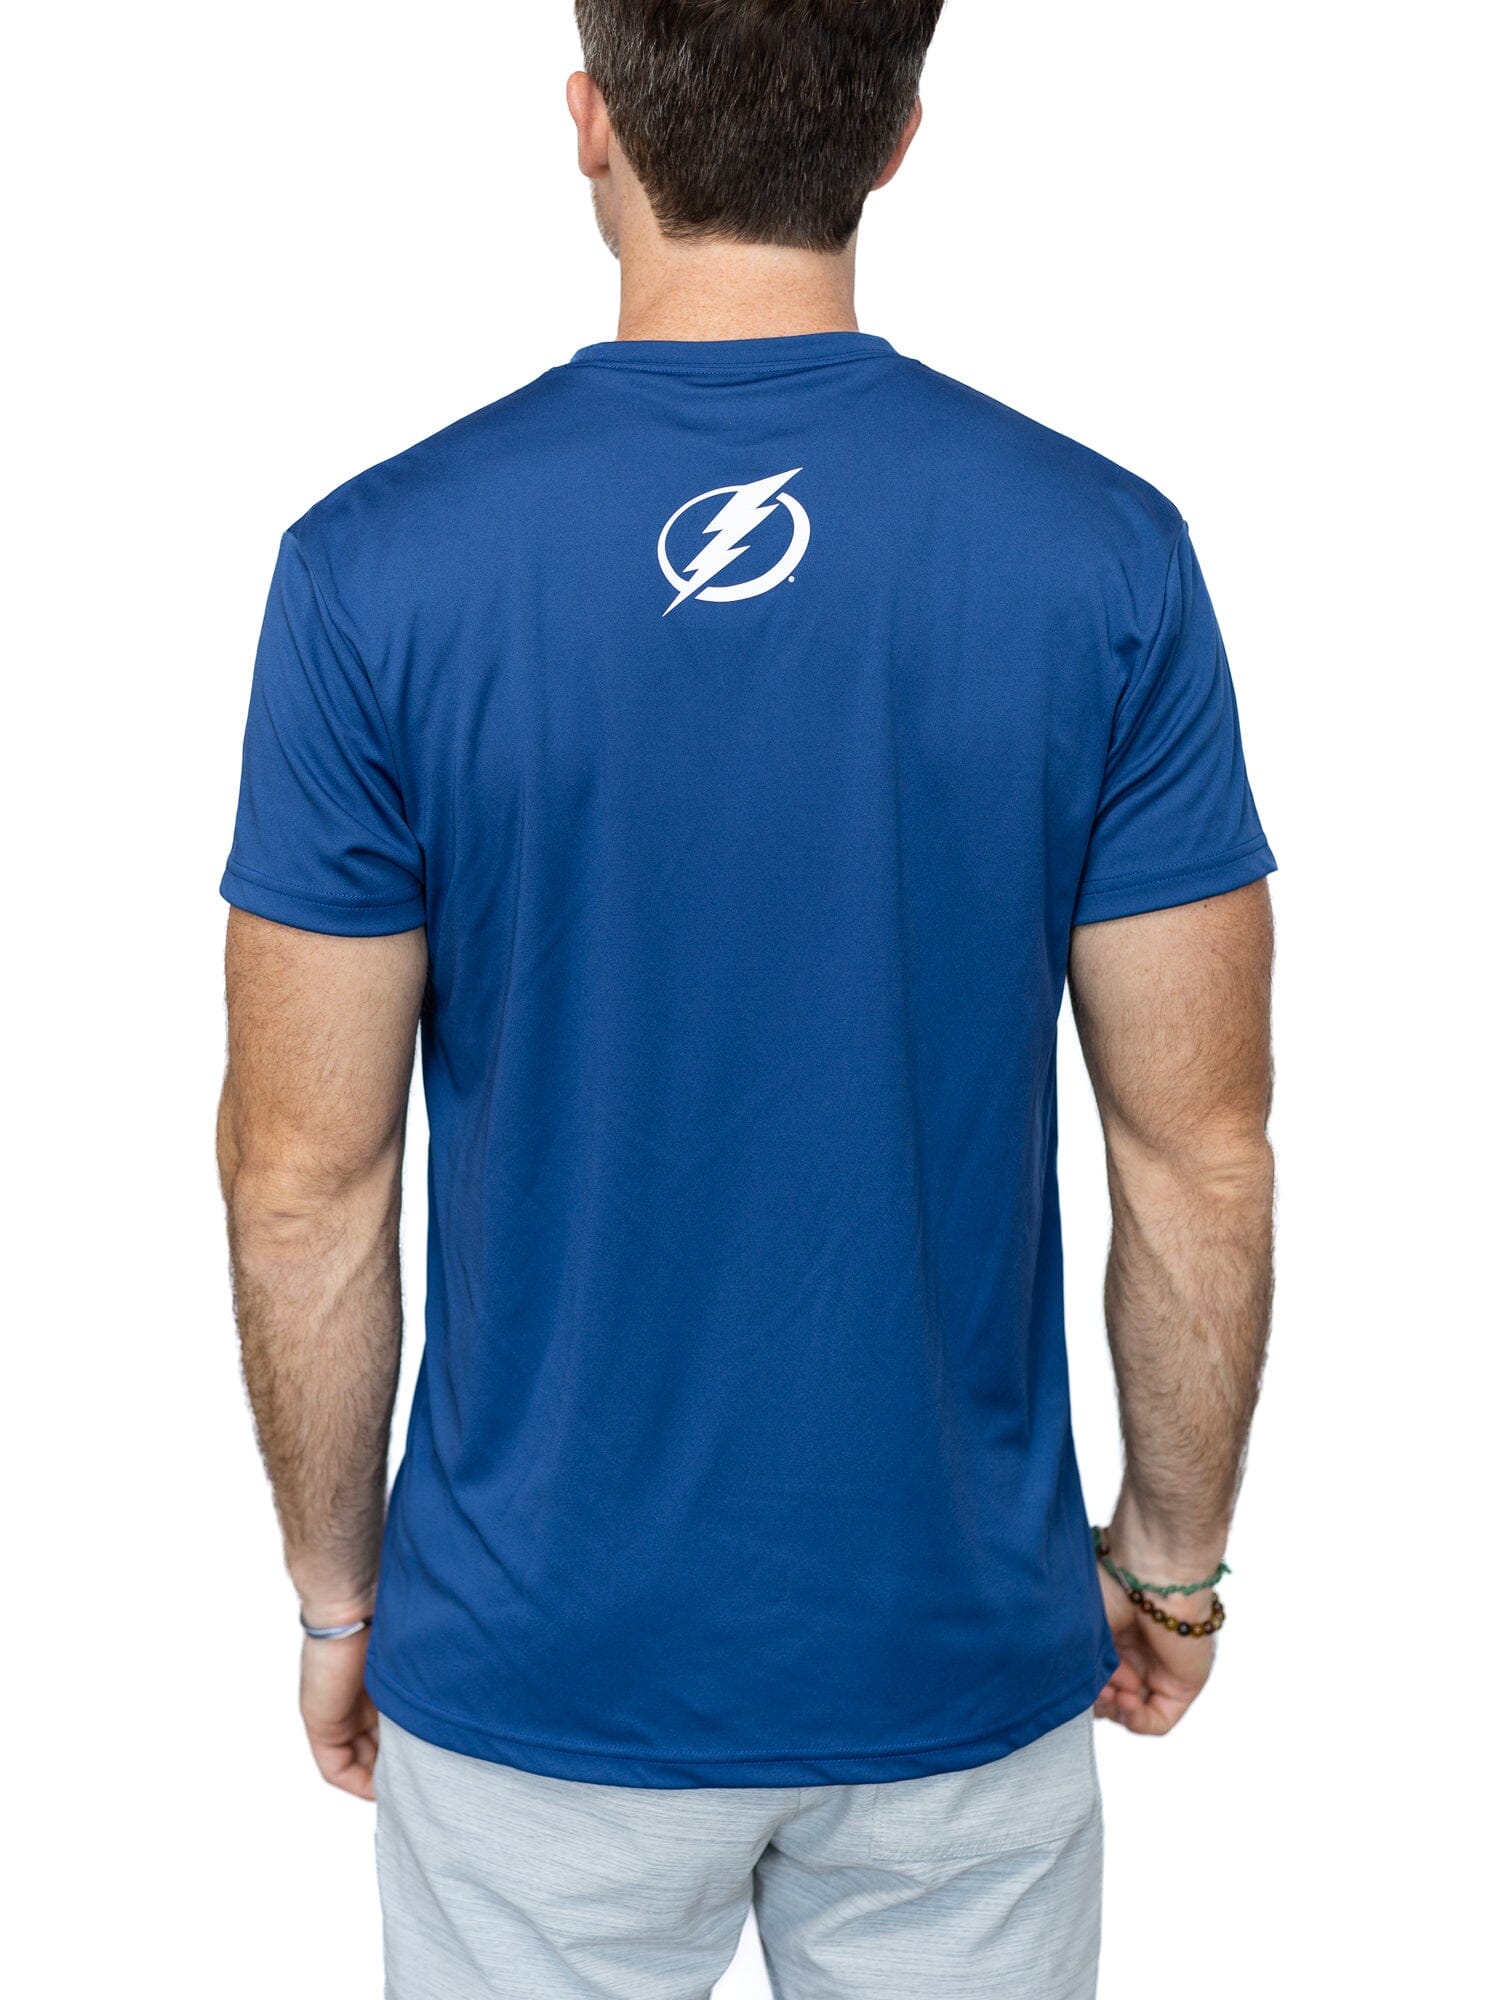 Tampa Bay Lightning "Full Fandom" Moisture Wicking T-Shirt - Back